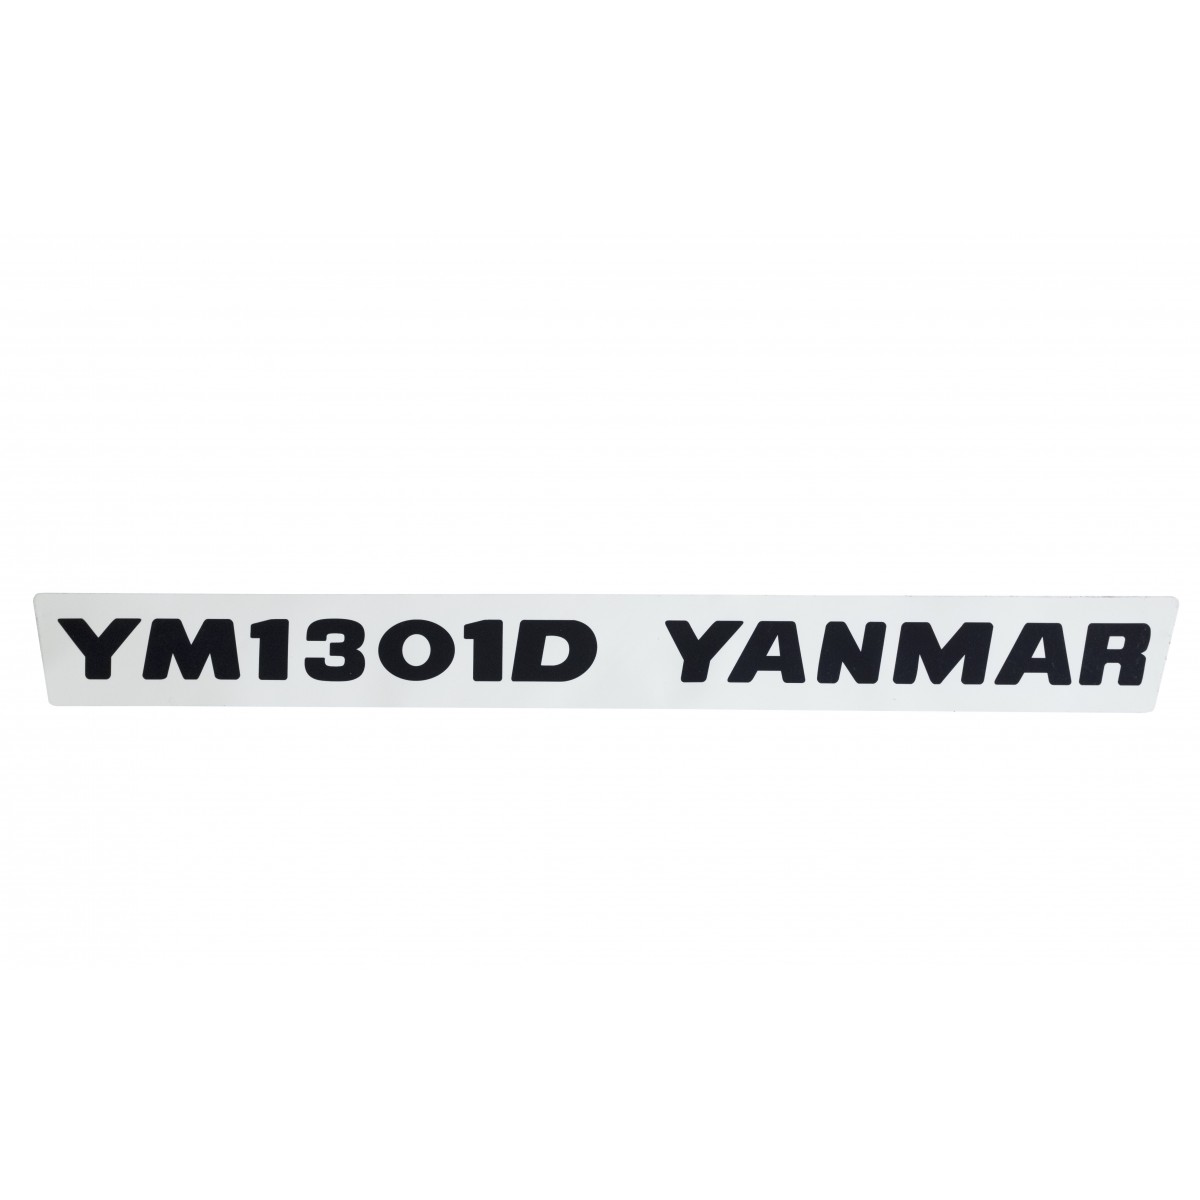 Naklejka Yanmar YM1301D